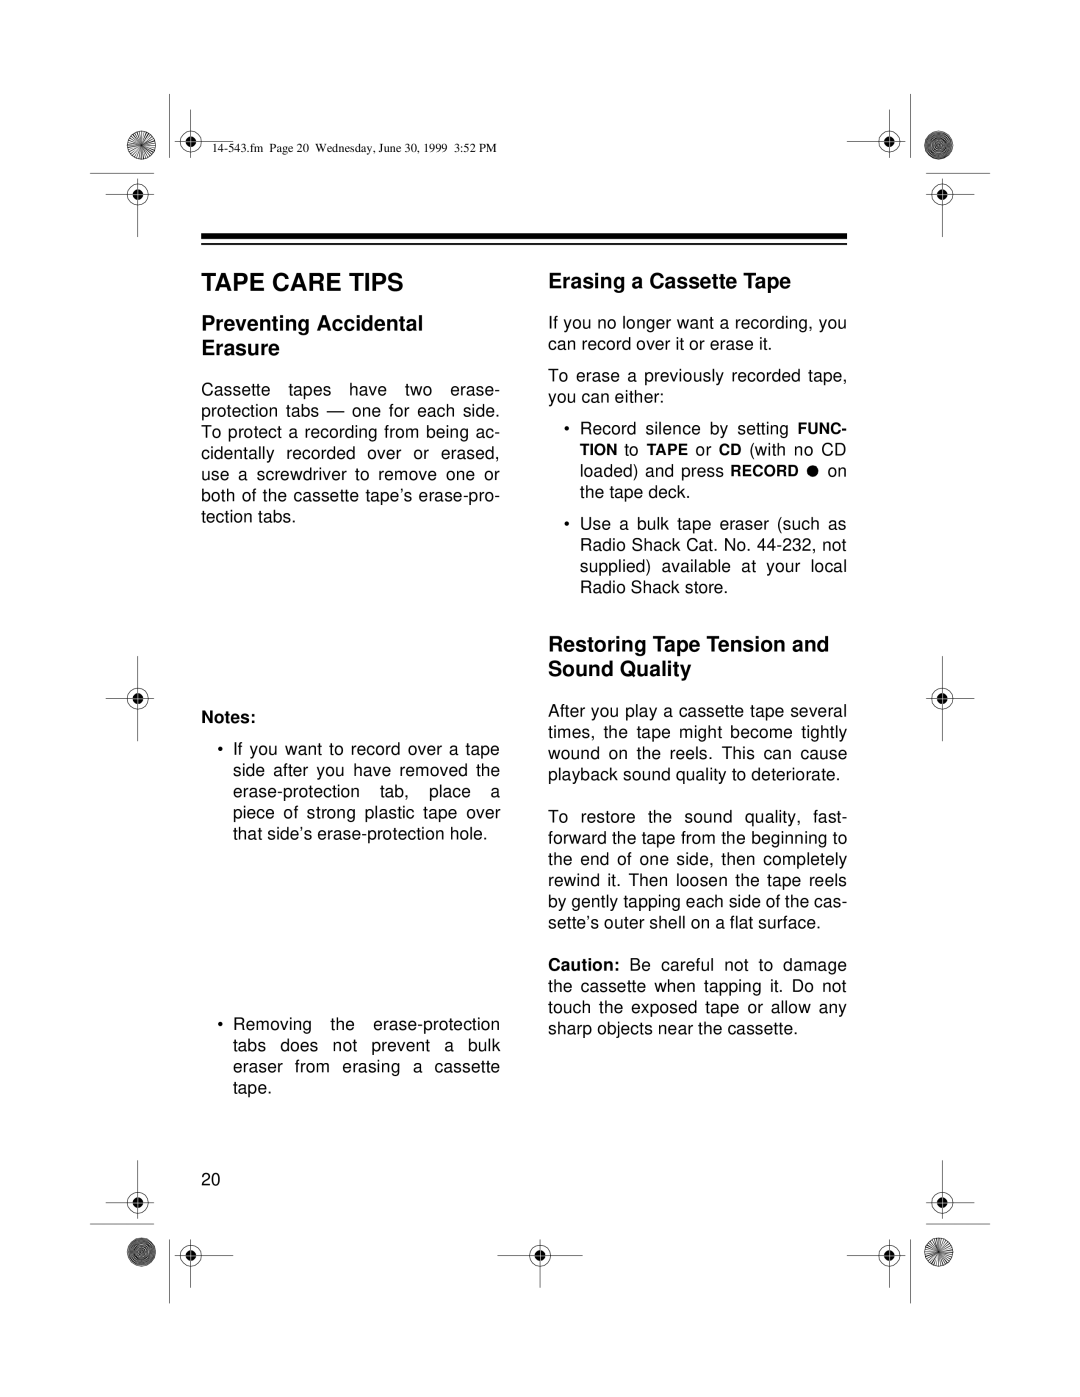 Radio Shack CD-3319 owner manual Tape Care Tips, Preventing Accidental Erasure, Erasing a Cassette Tape 